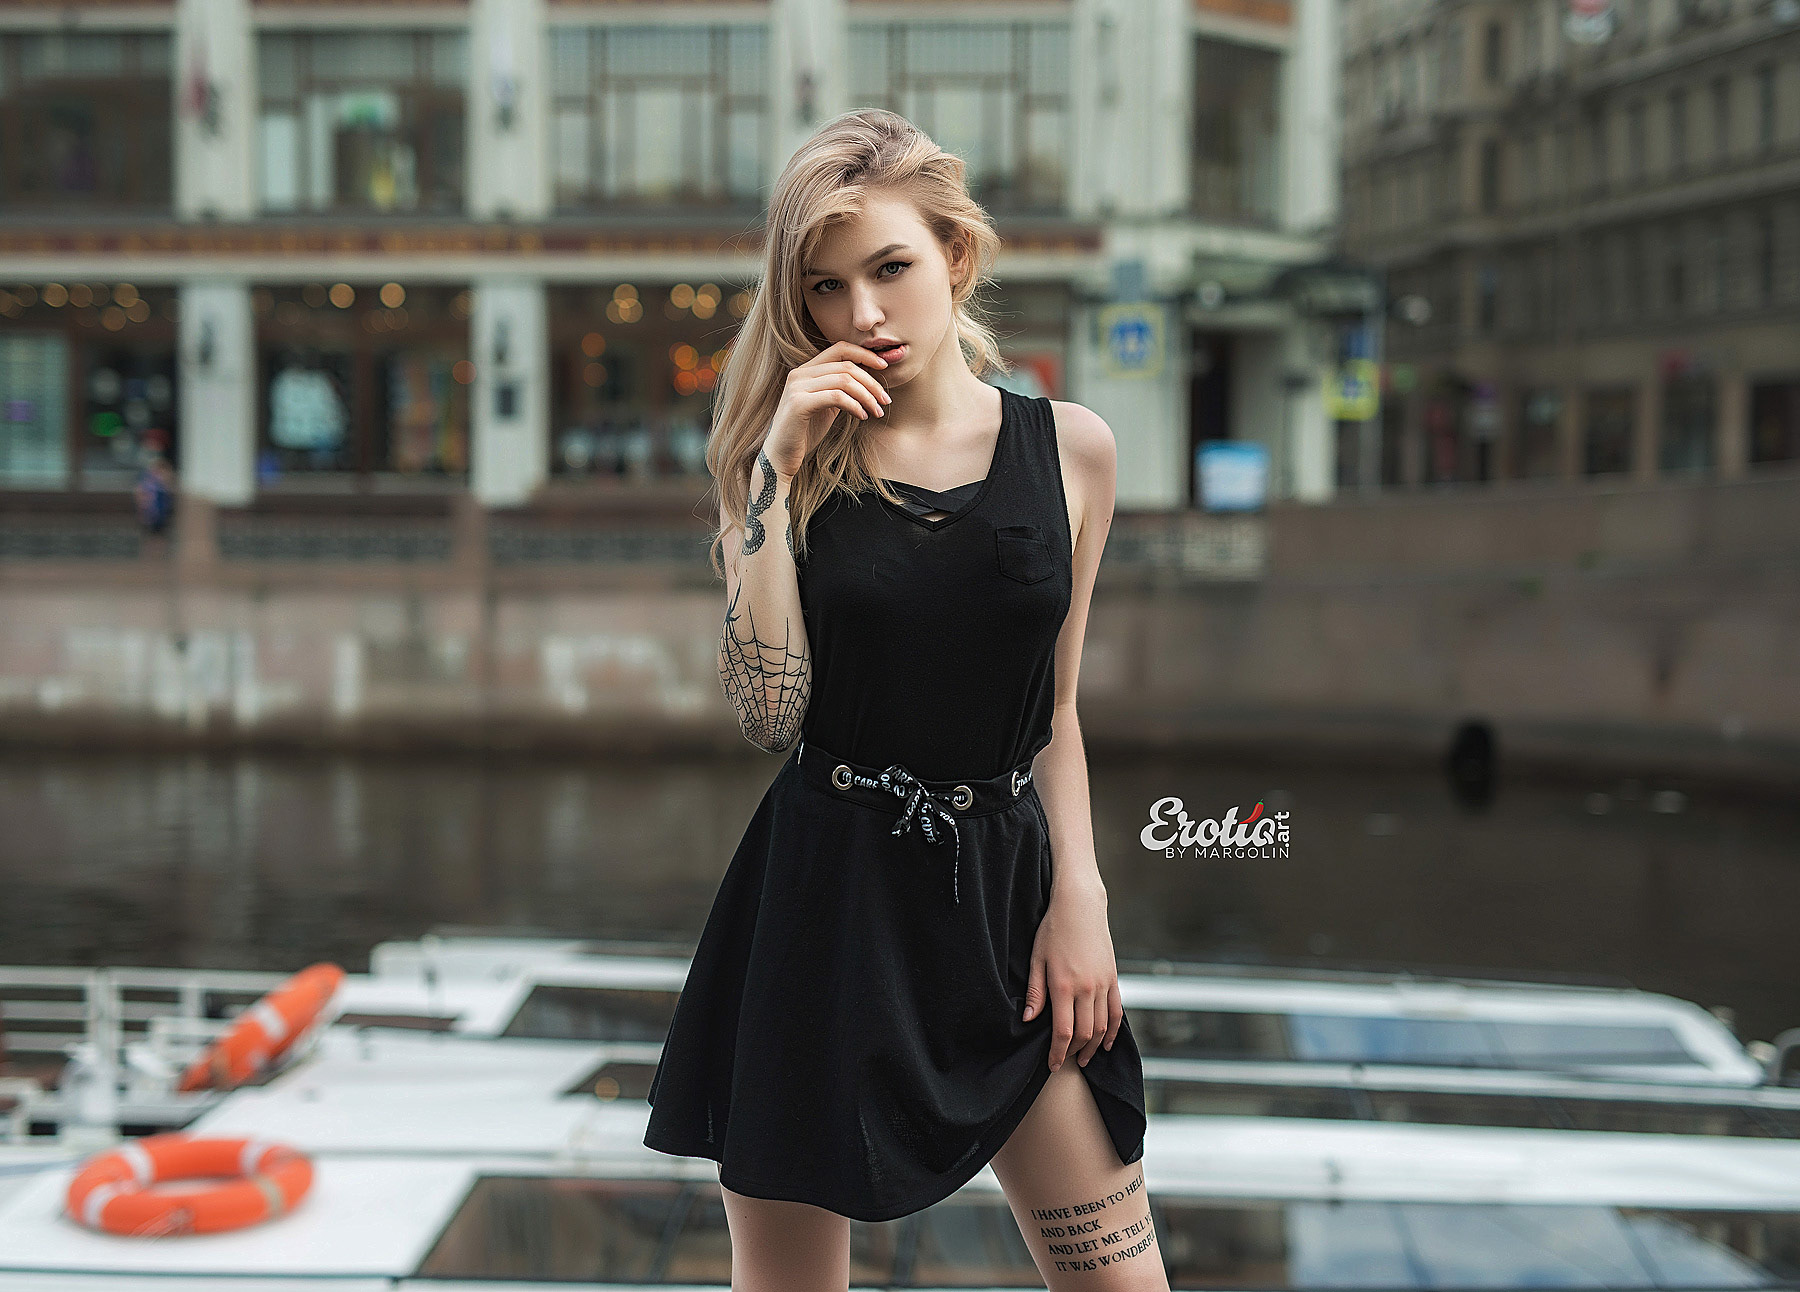 Women Blonde Portrait Tattoo Black Dress Finger On Lips Women Outdoors Bare Shoulders Aleksandr Marg 1800x1292